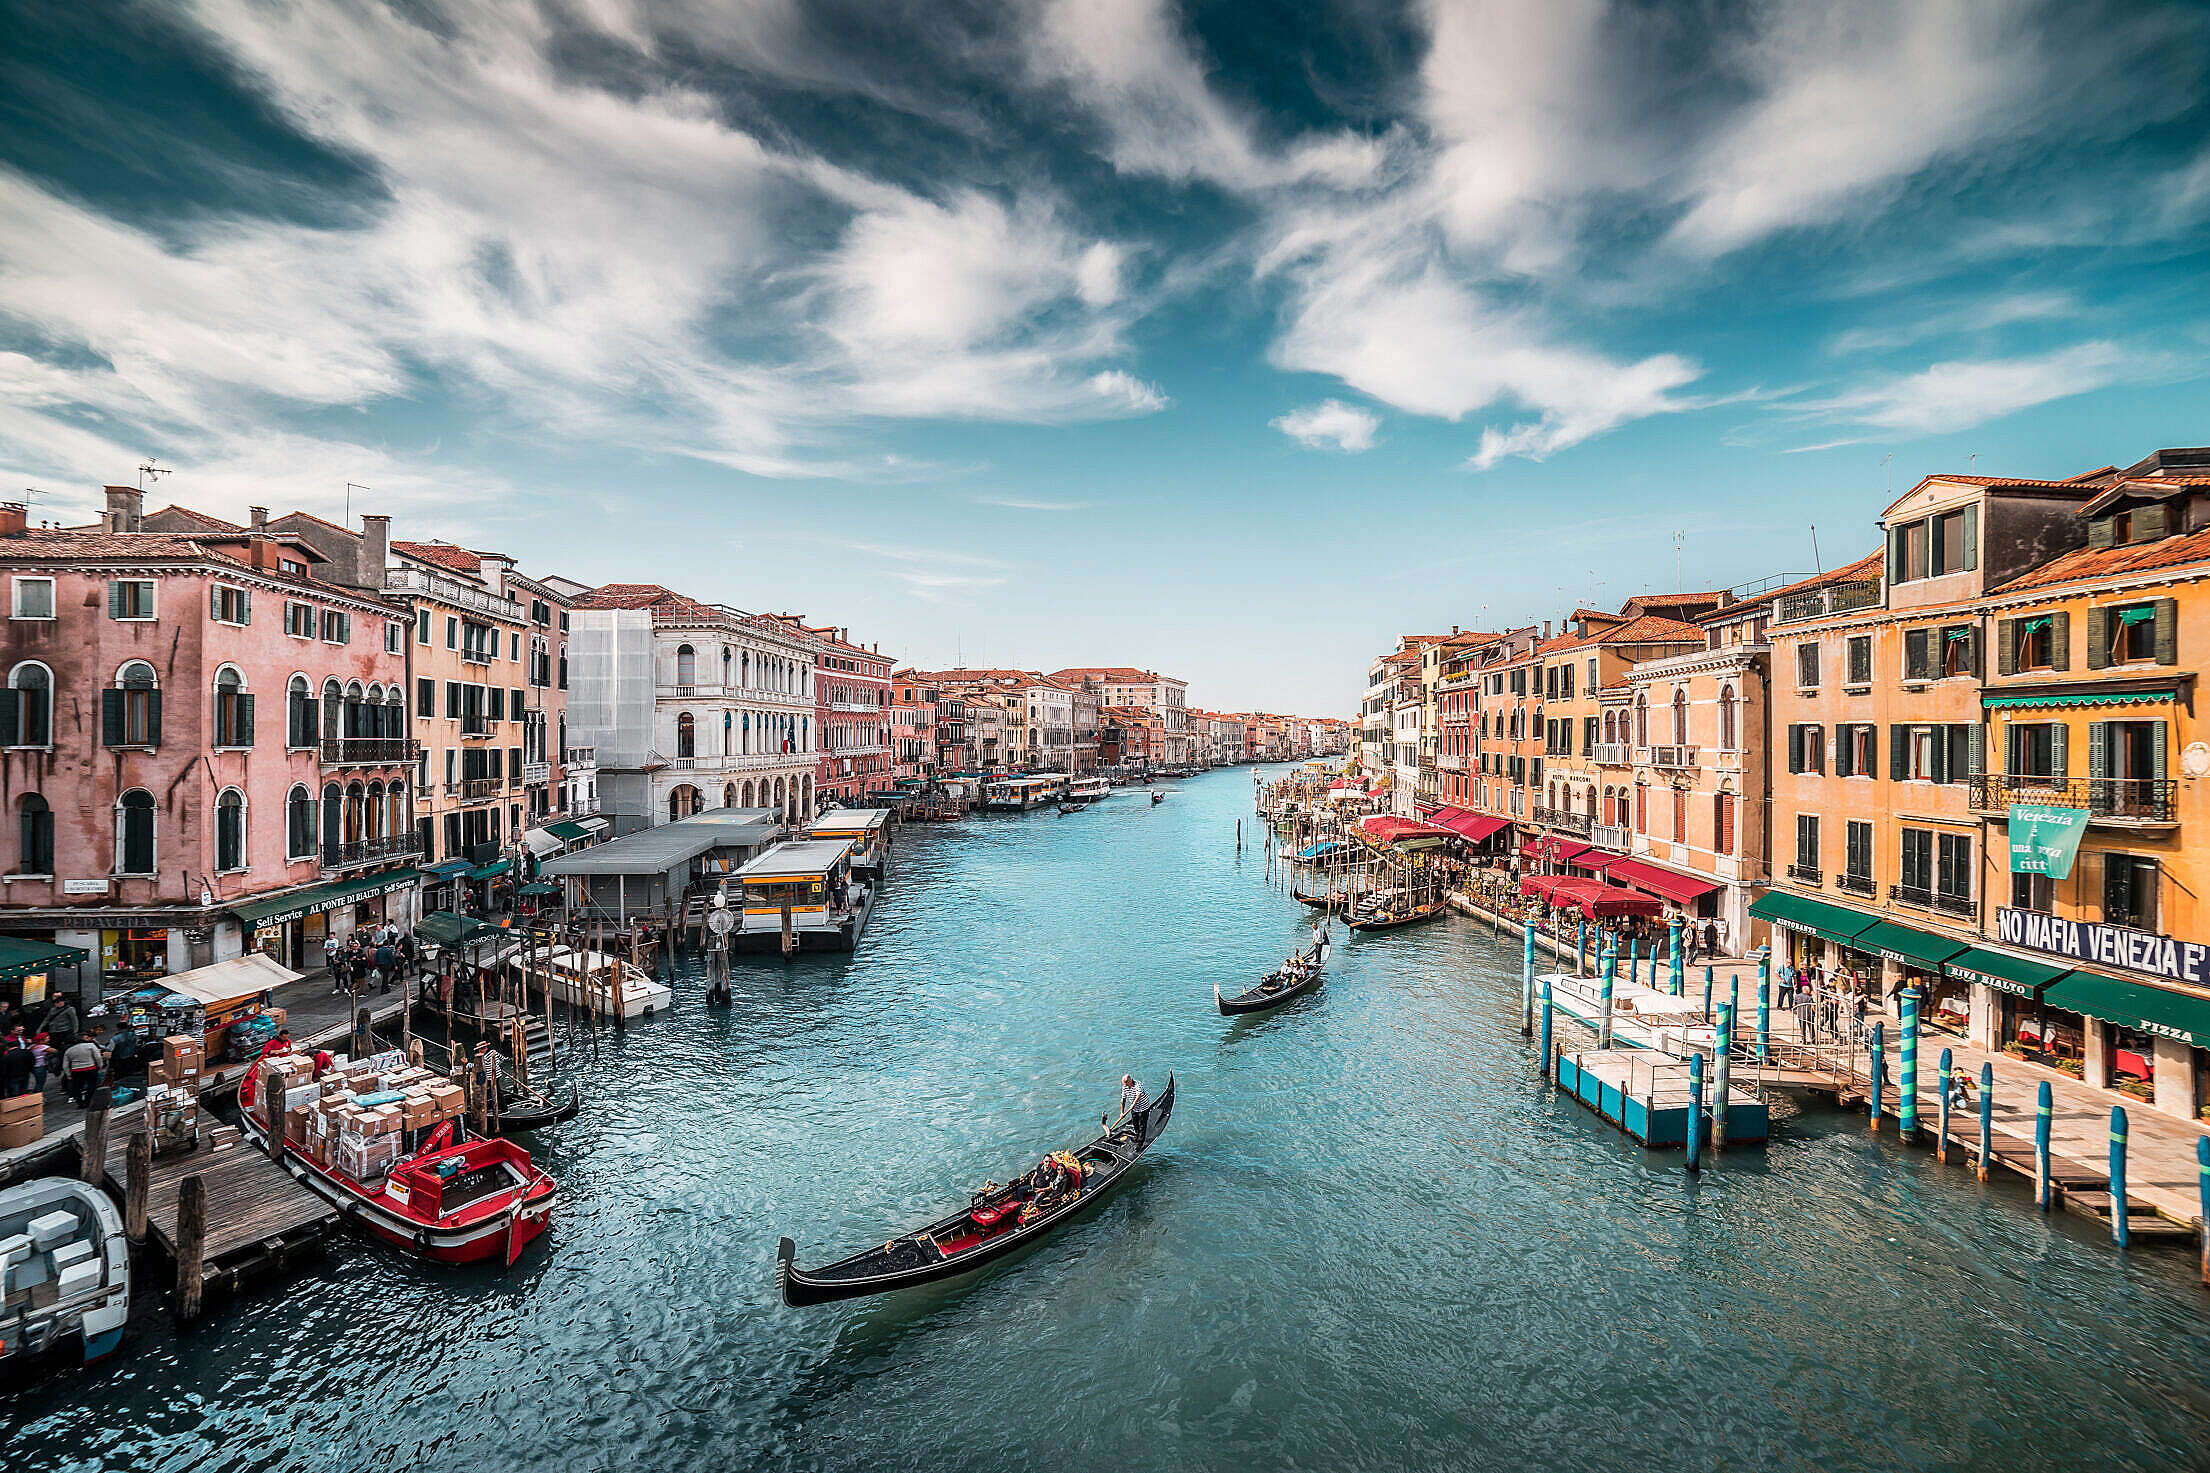 Download Canal Grande With Gondolas In Venice Free Stock Photo Picjumbo